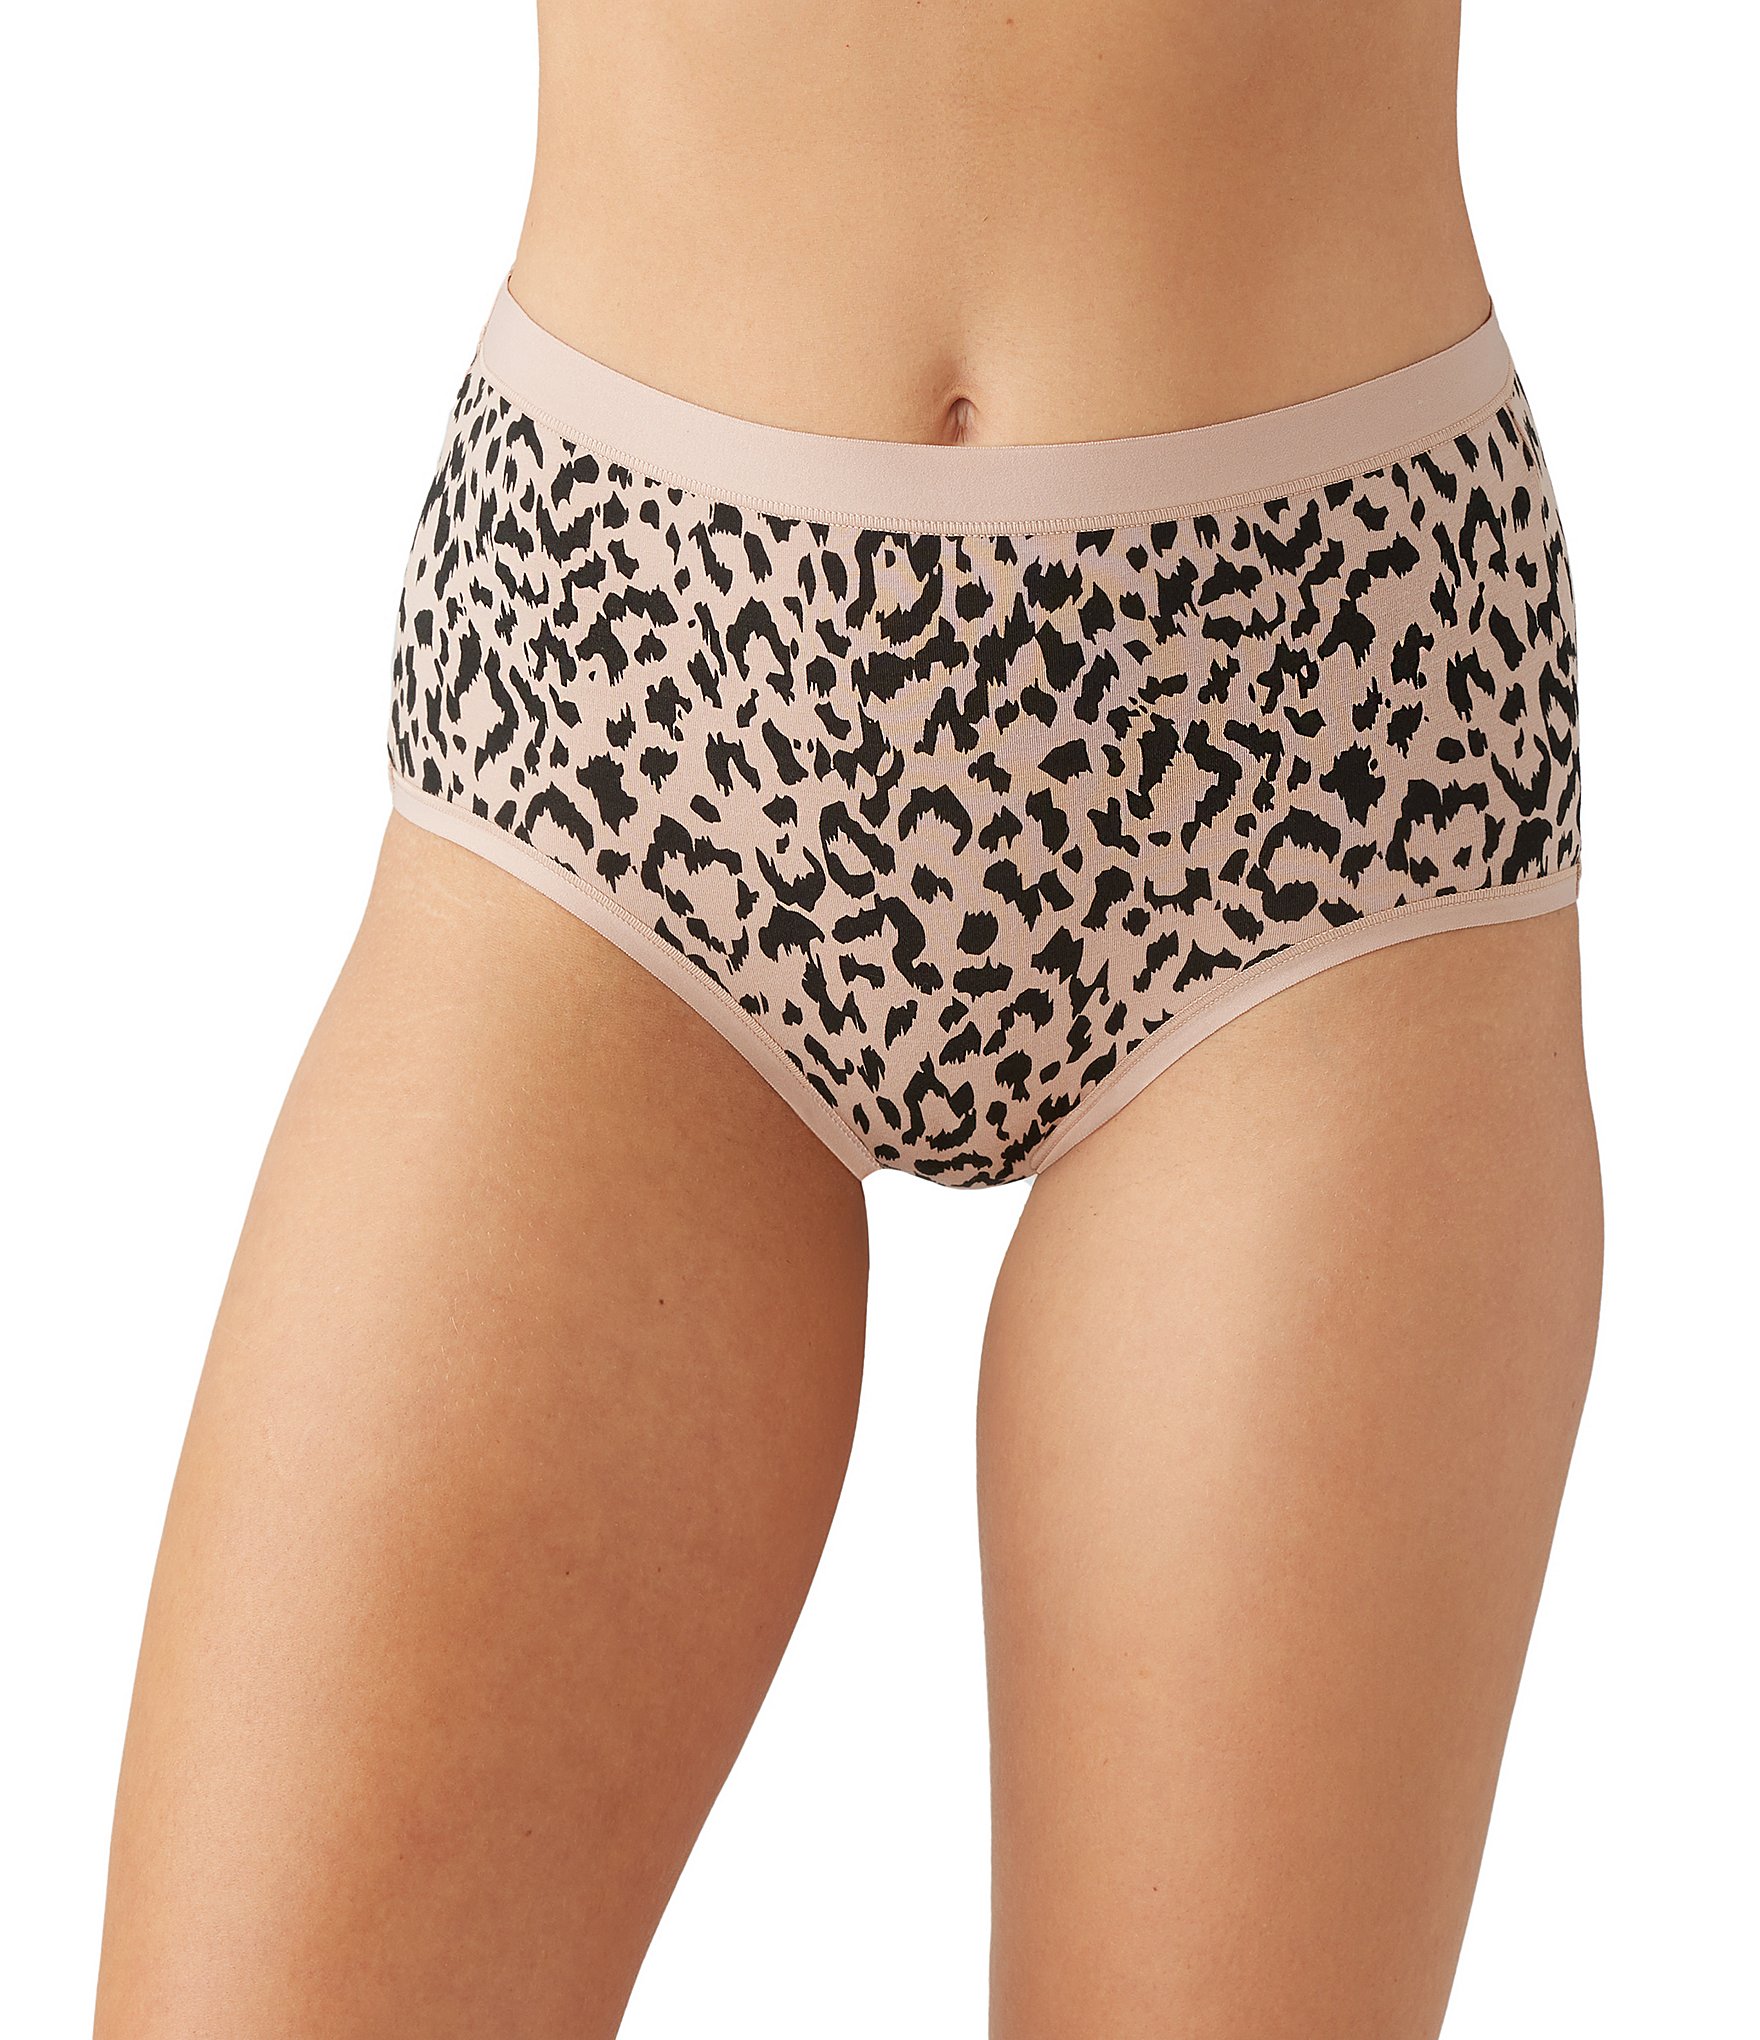 Wacoal Cheetah Print Understated Cotton Brief Panty | Dillard's